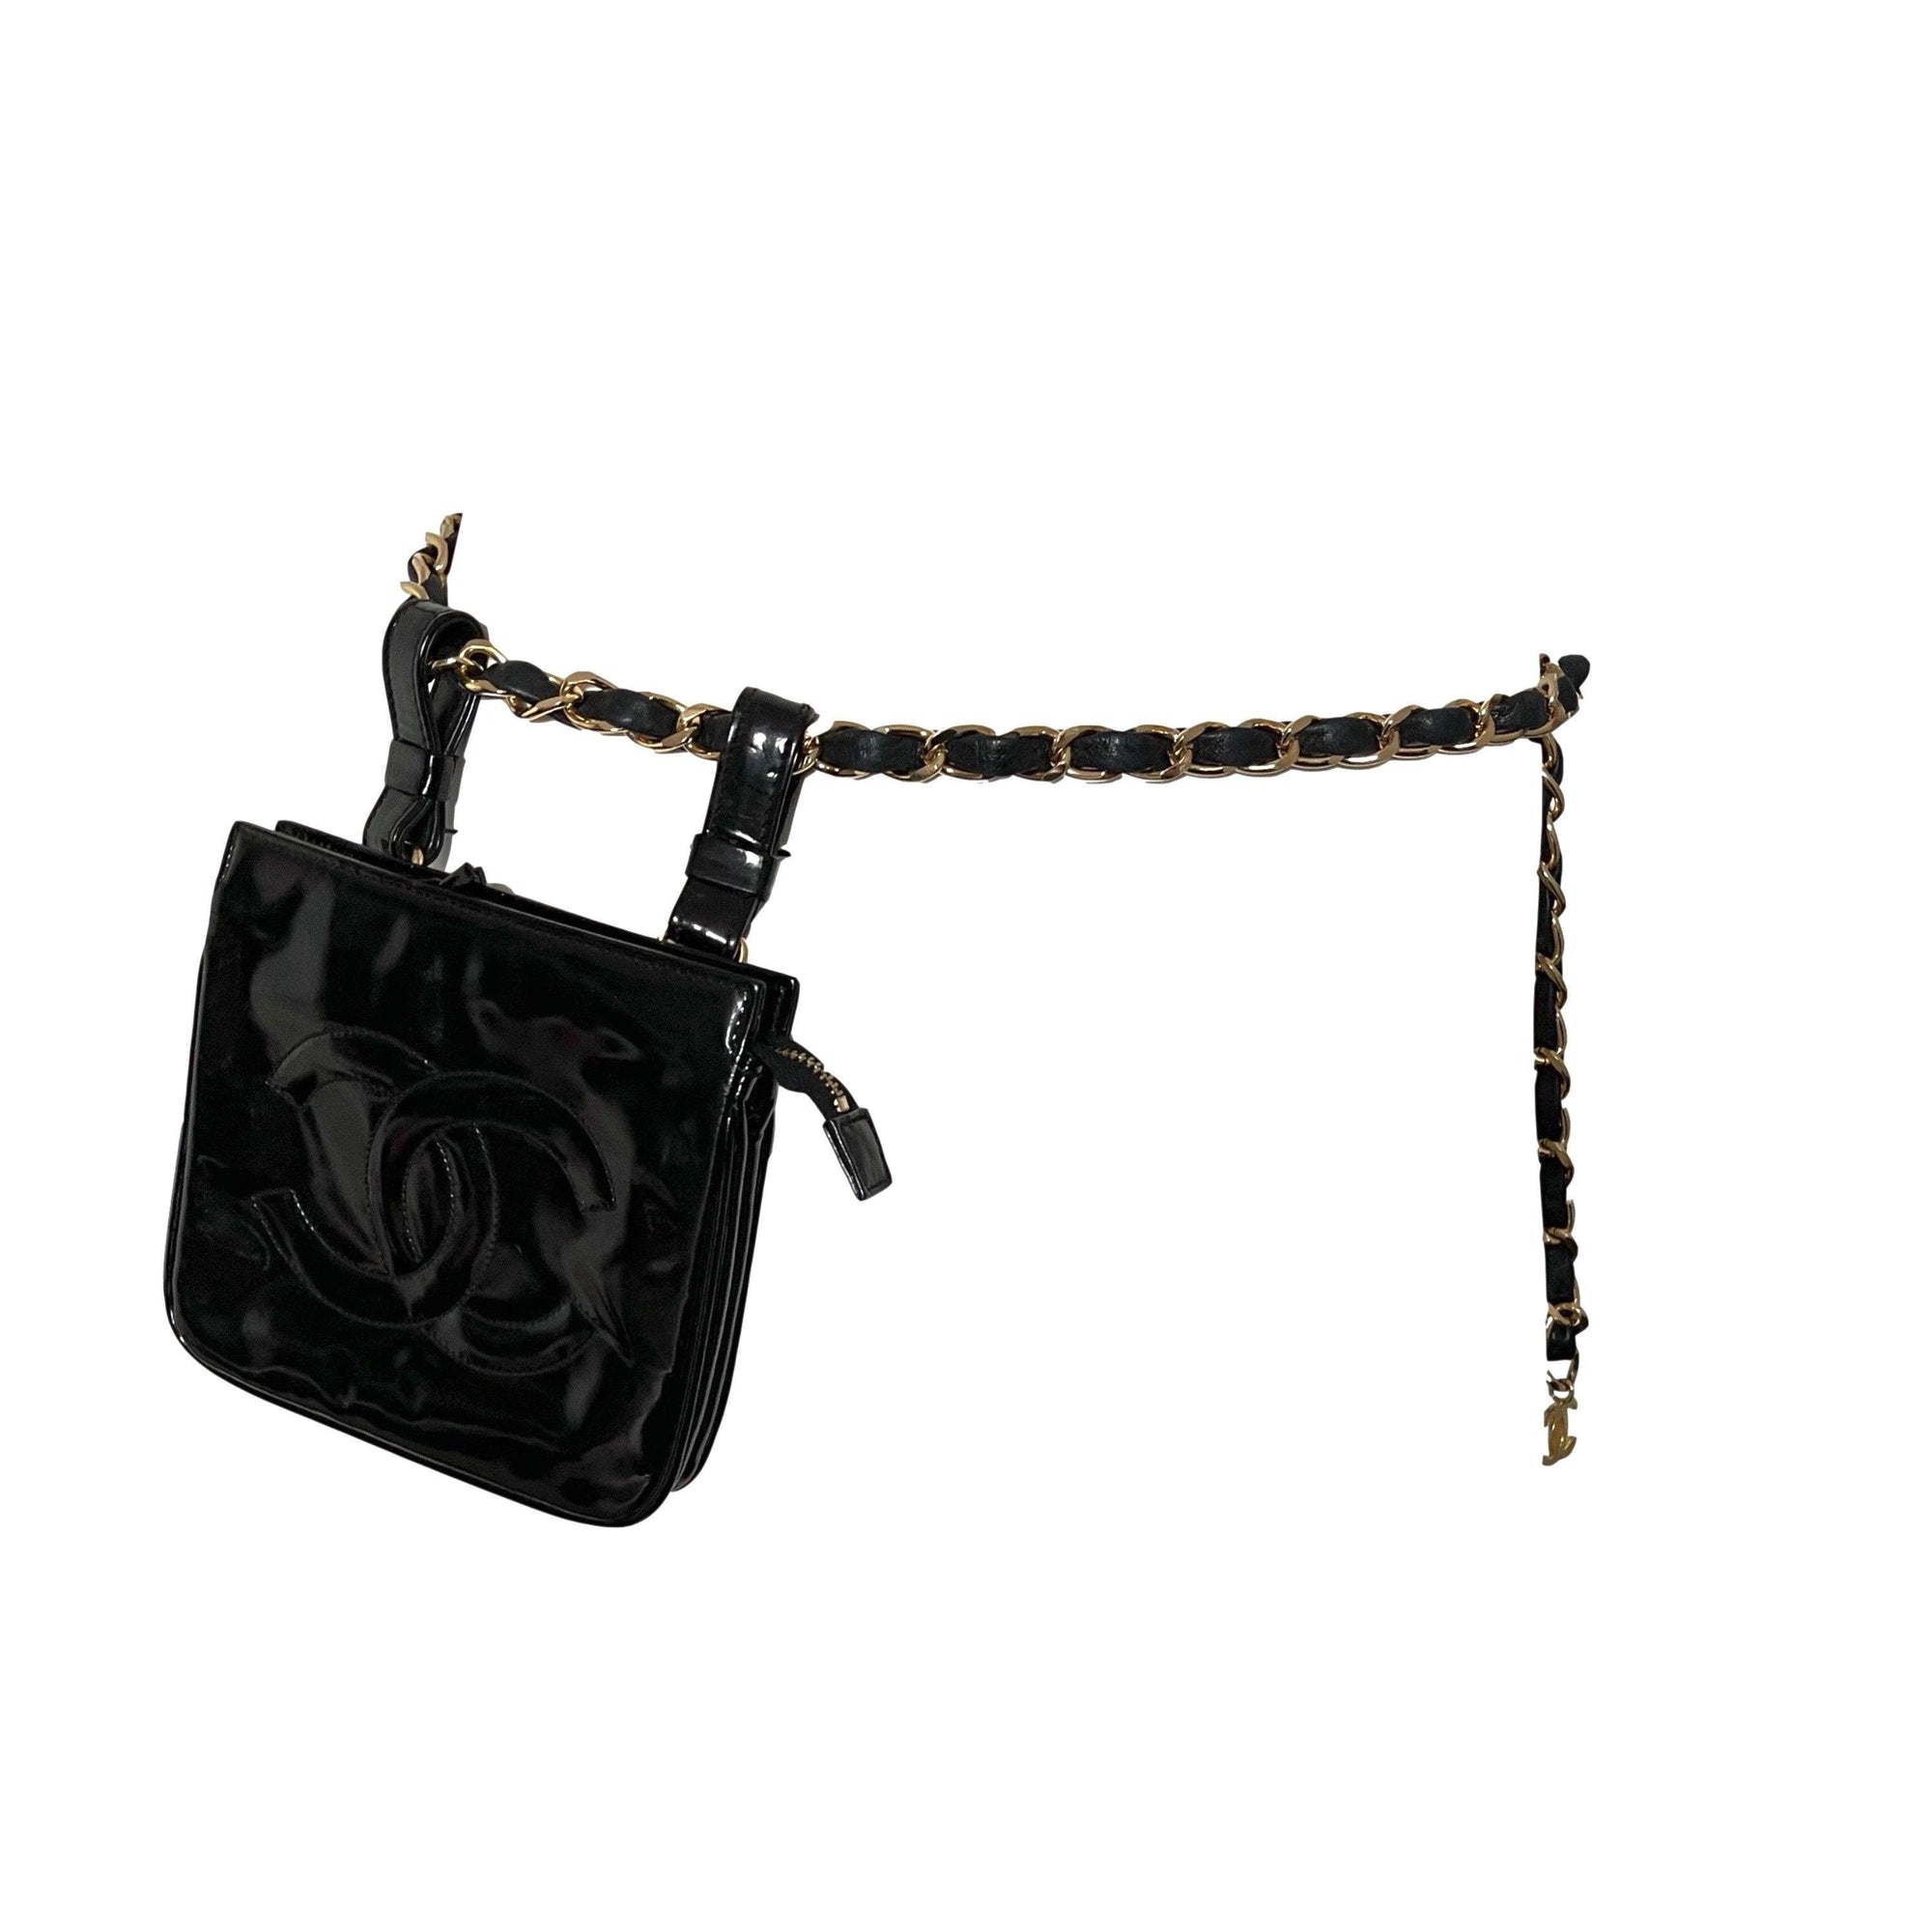 Chanel Black Logo Patent Belt Bag - Handbags